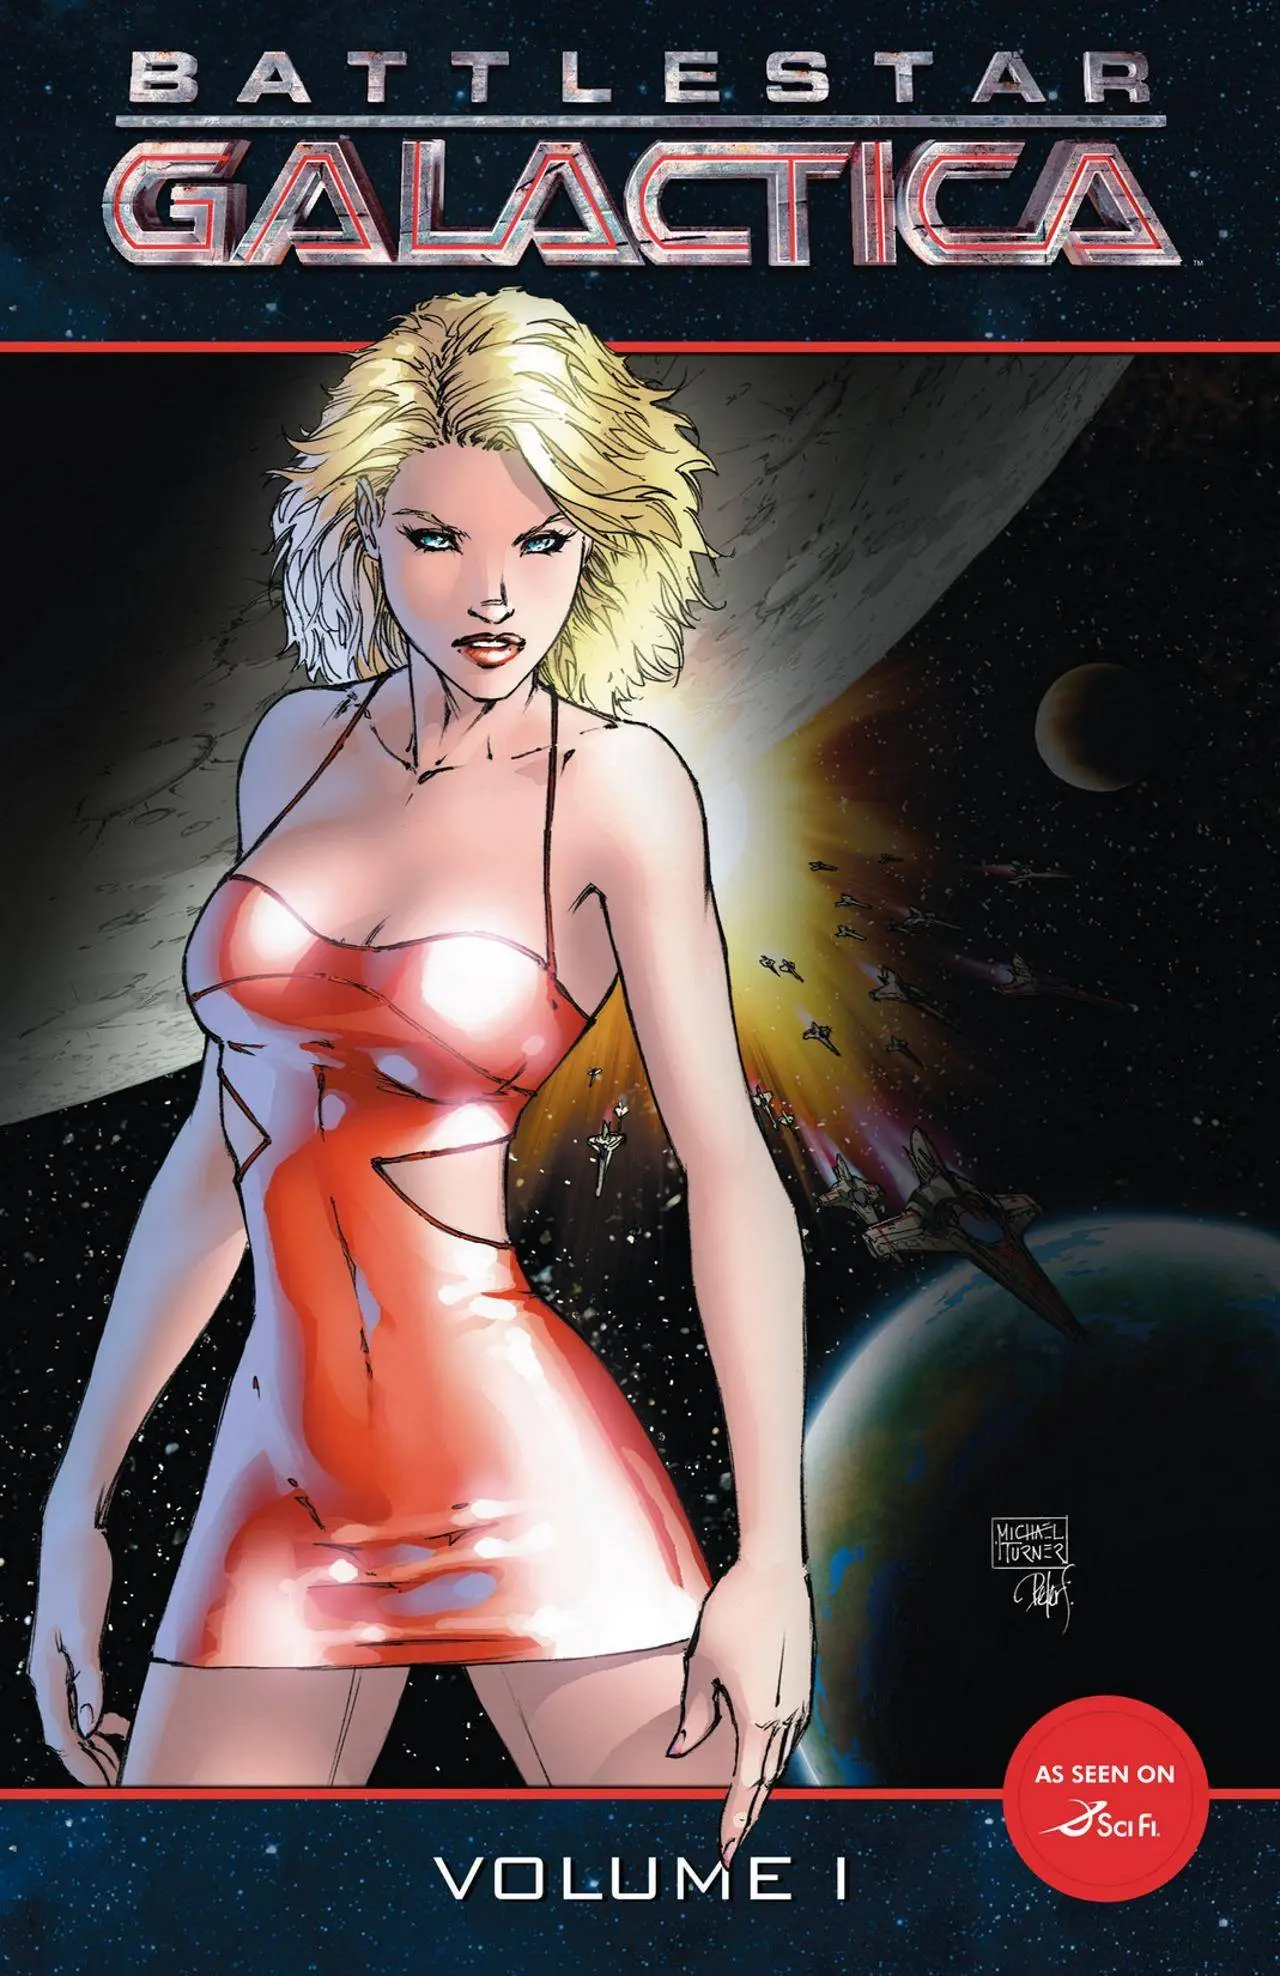 Battlestar Galactica Vol 1 TPB 2007 4 covers Digital